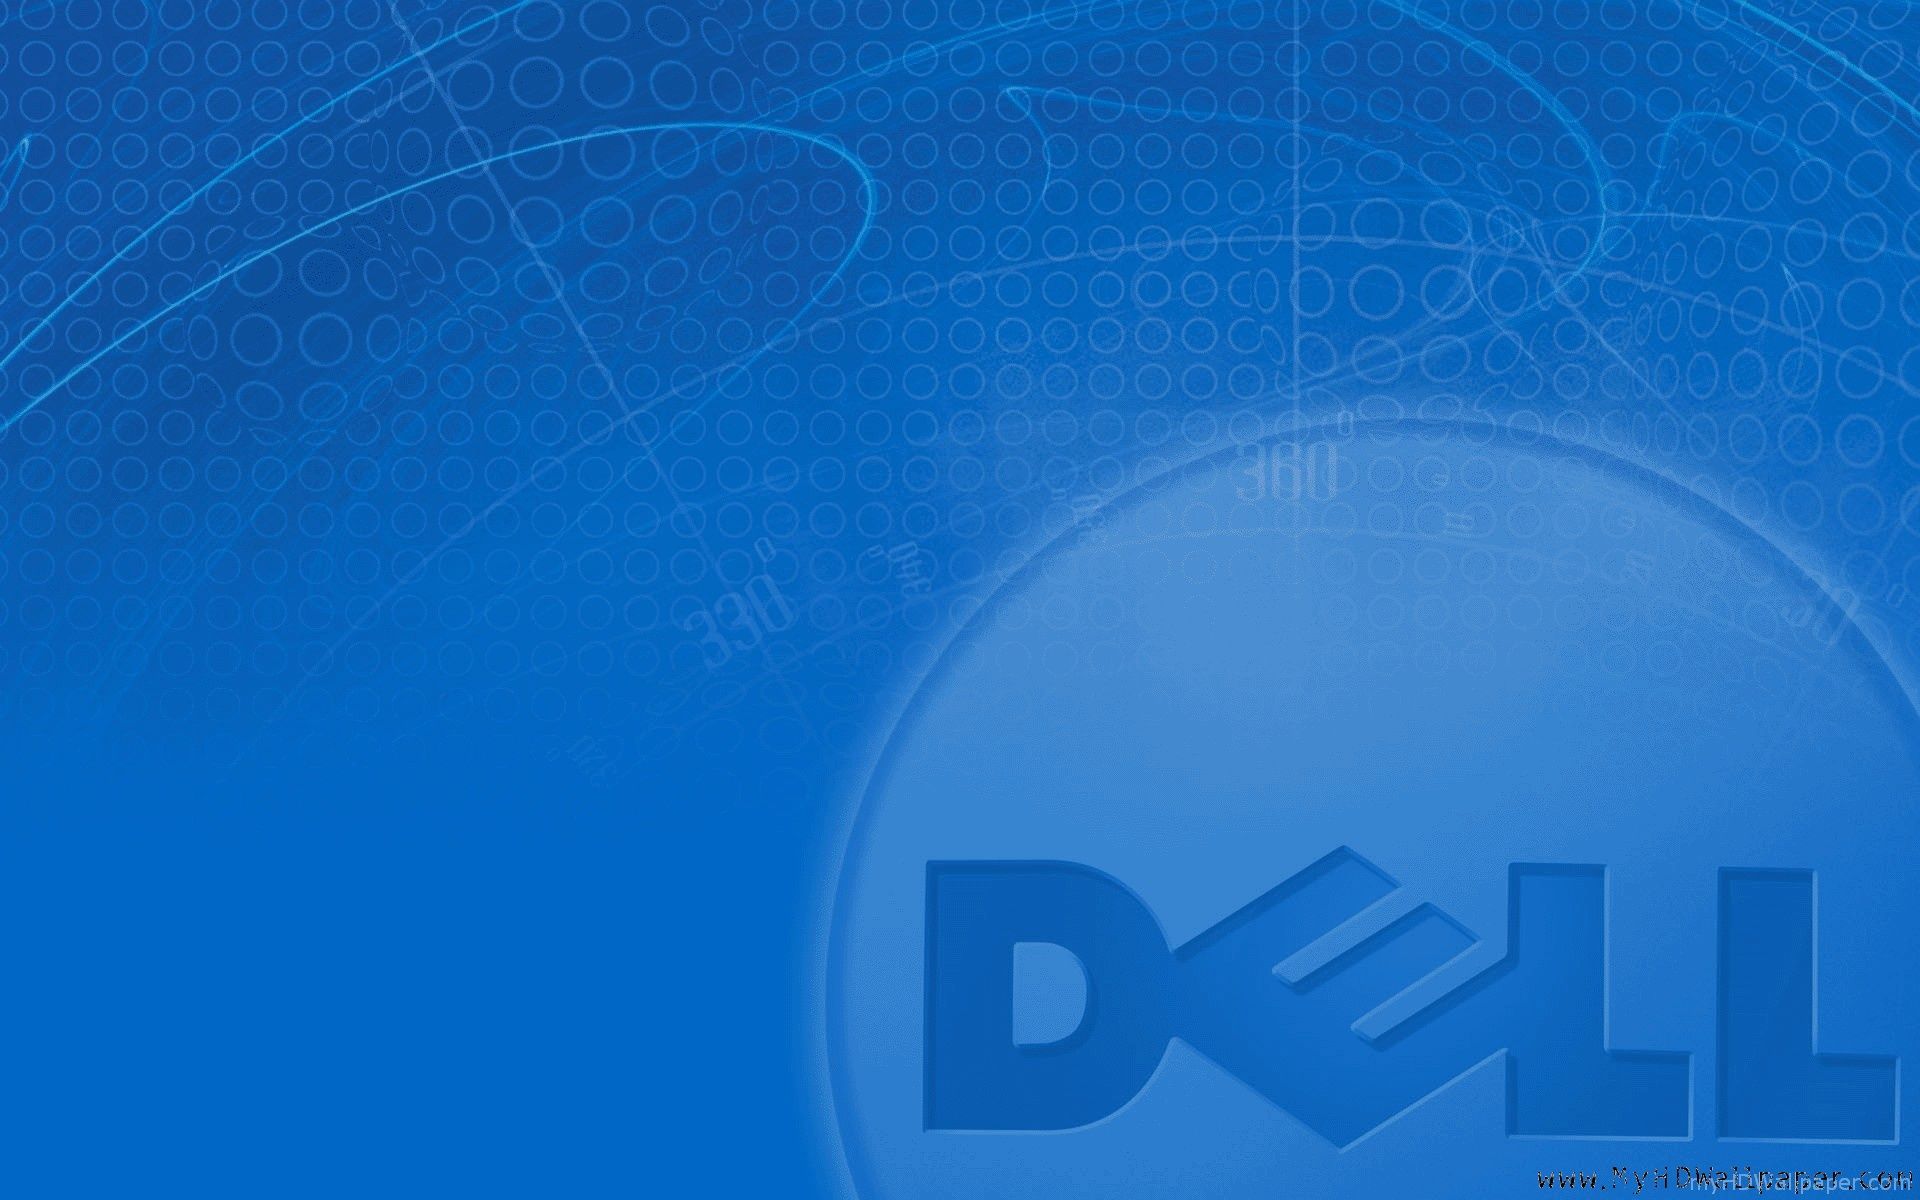 Dell Desktop Background - wallpaper.